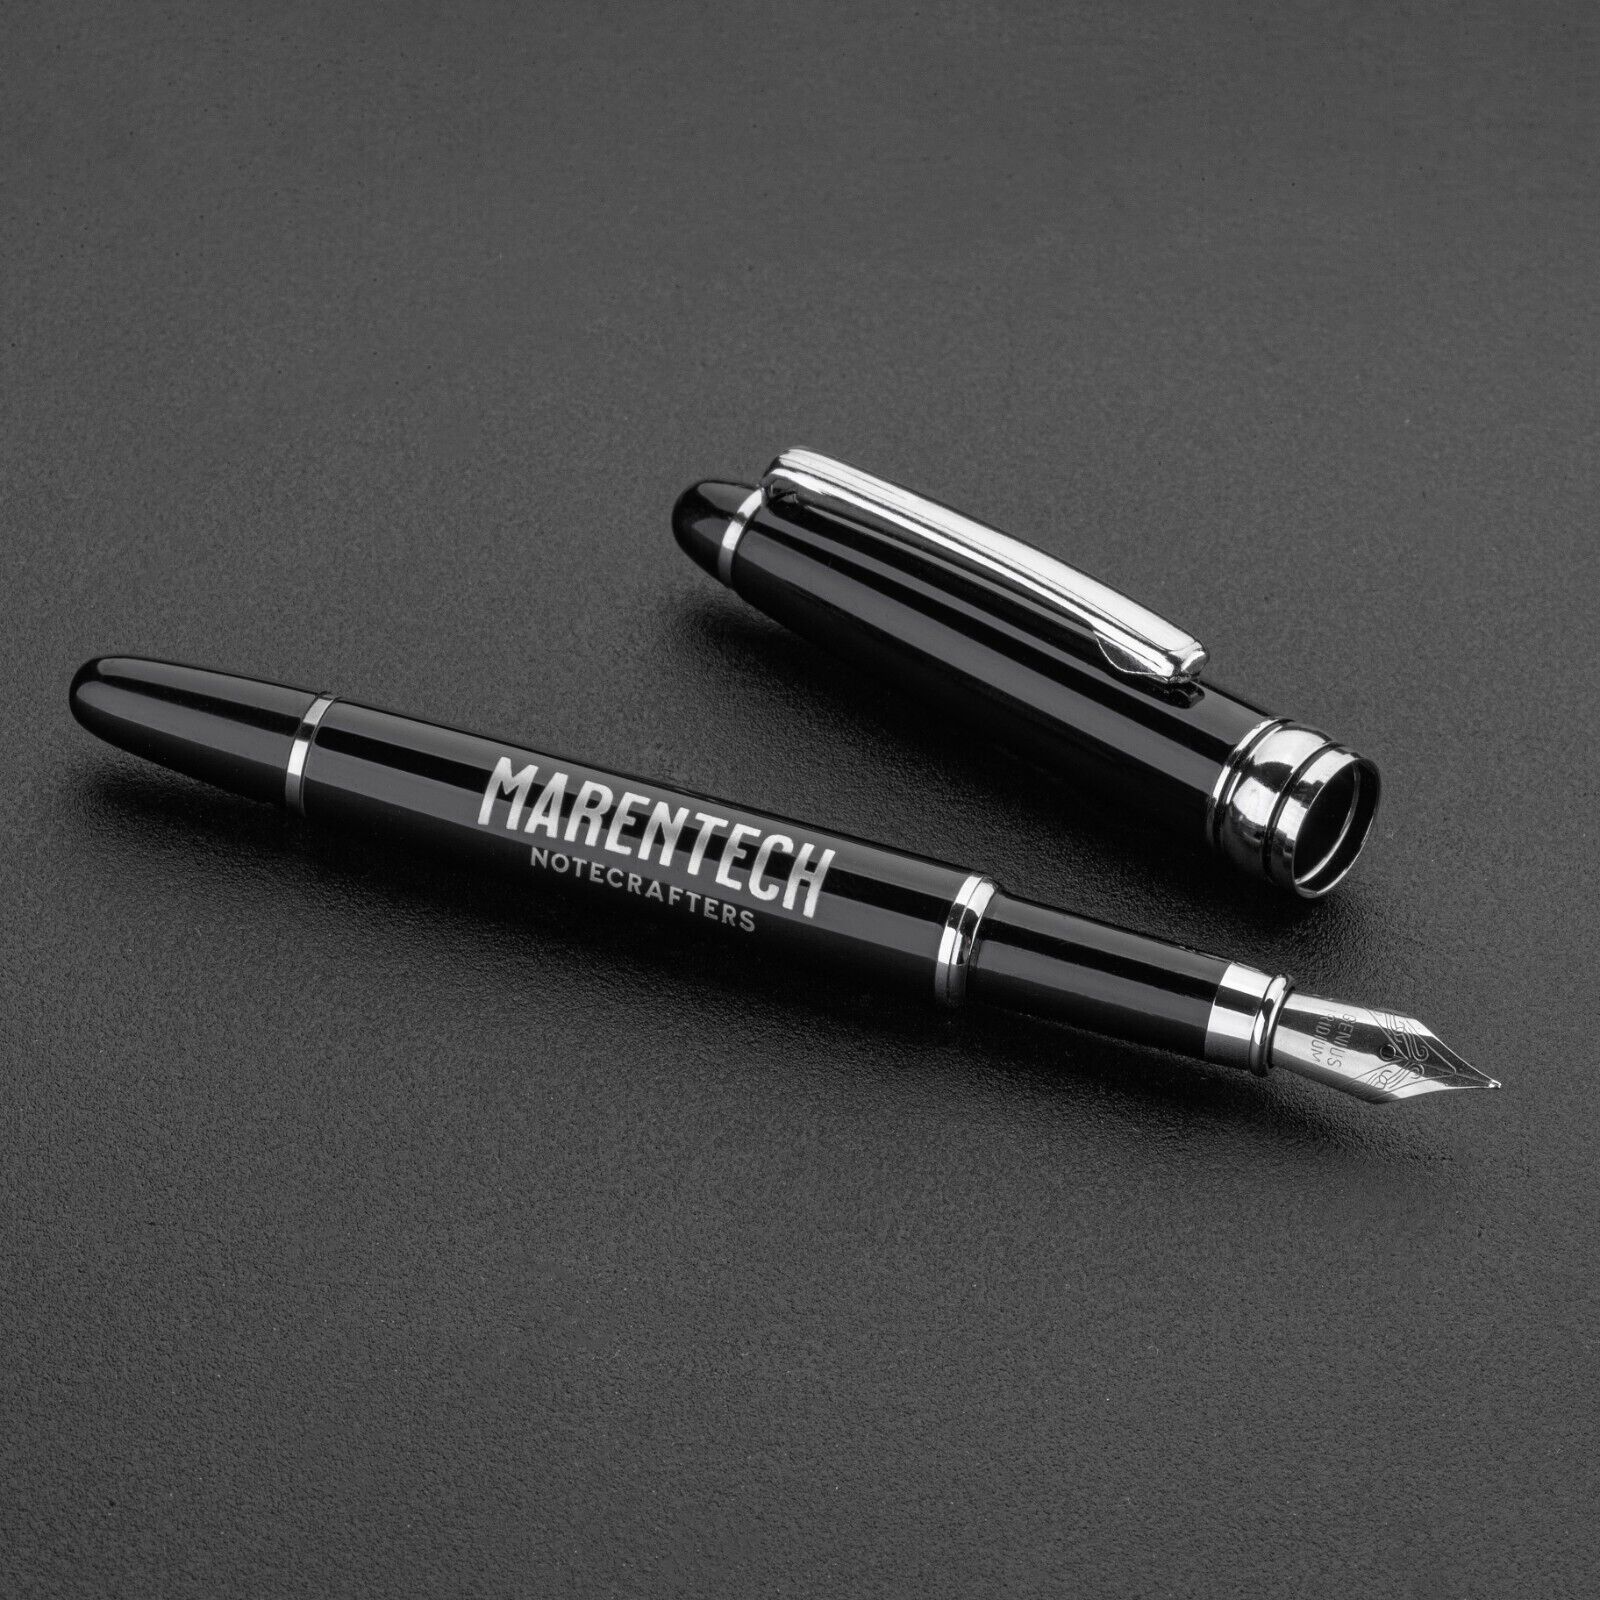 Marentech Notecrafters 0.5 mm Fountain Ink Pen - Precision Writing